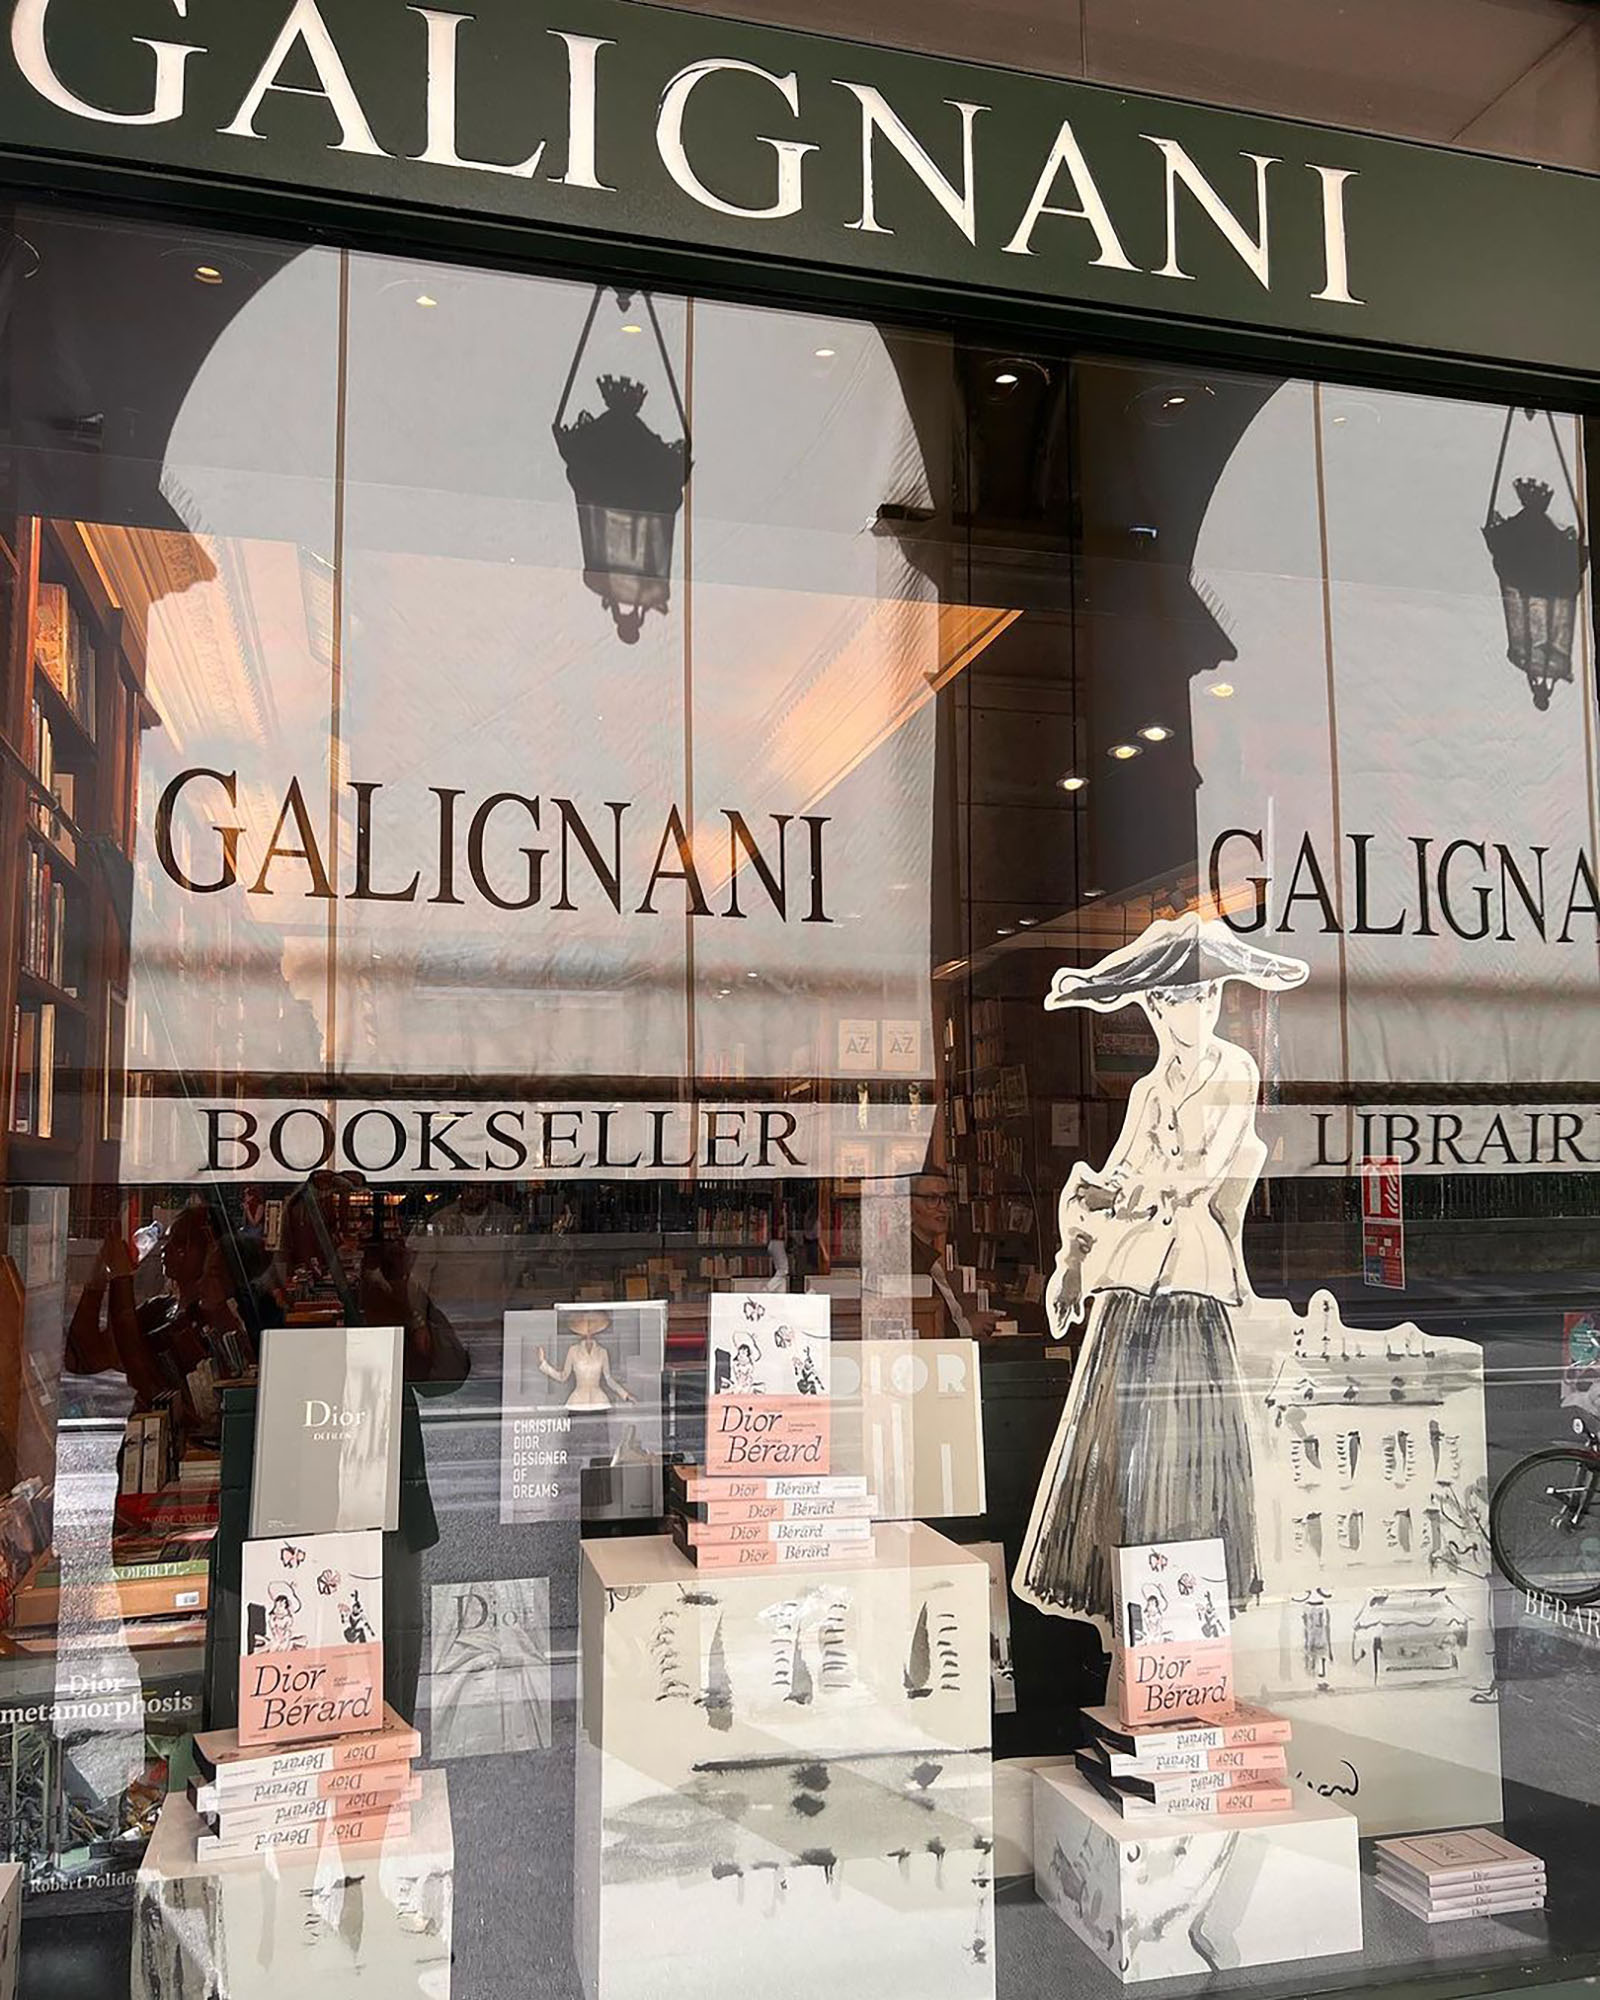 Librairie Galignani’s storefront.